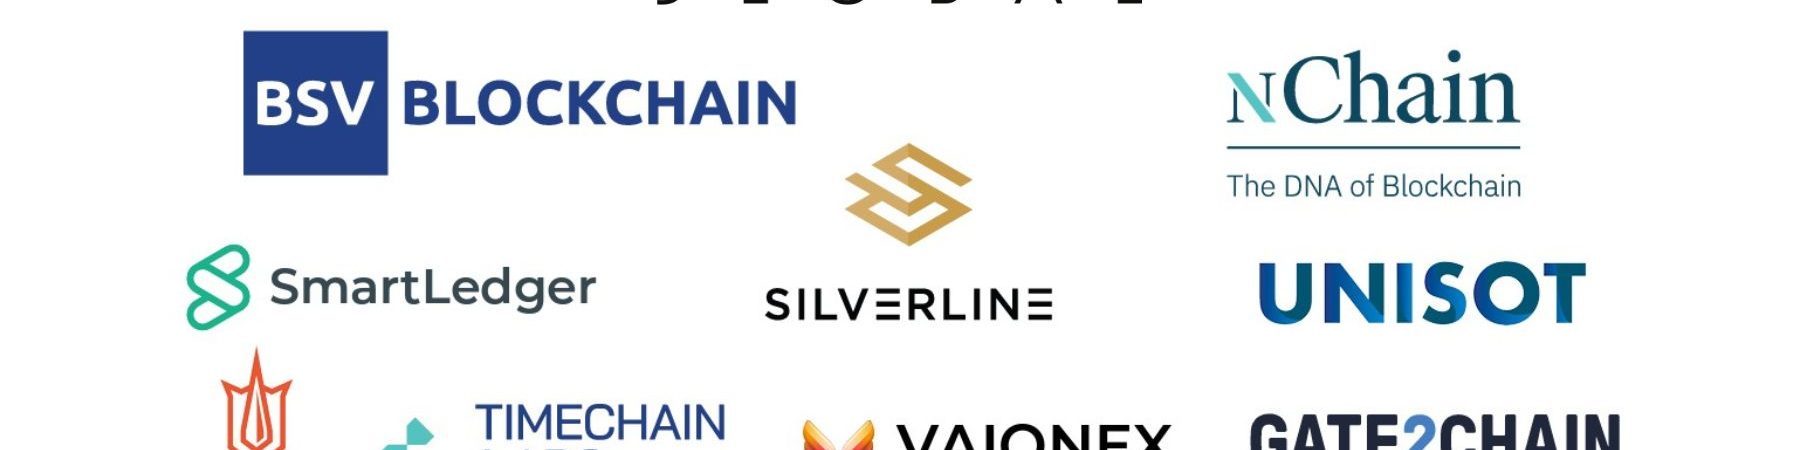 BSV Blockchain and MENA tech entity Silverline to showcase digital passports at Gitex 2023